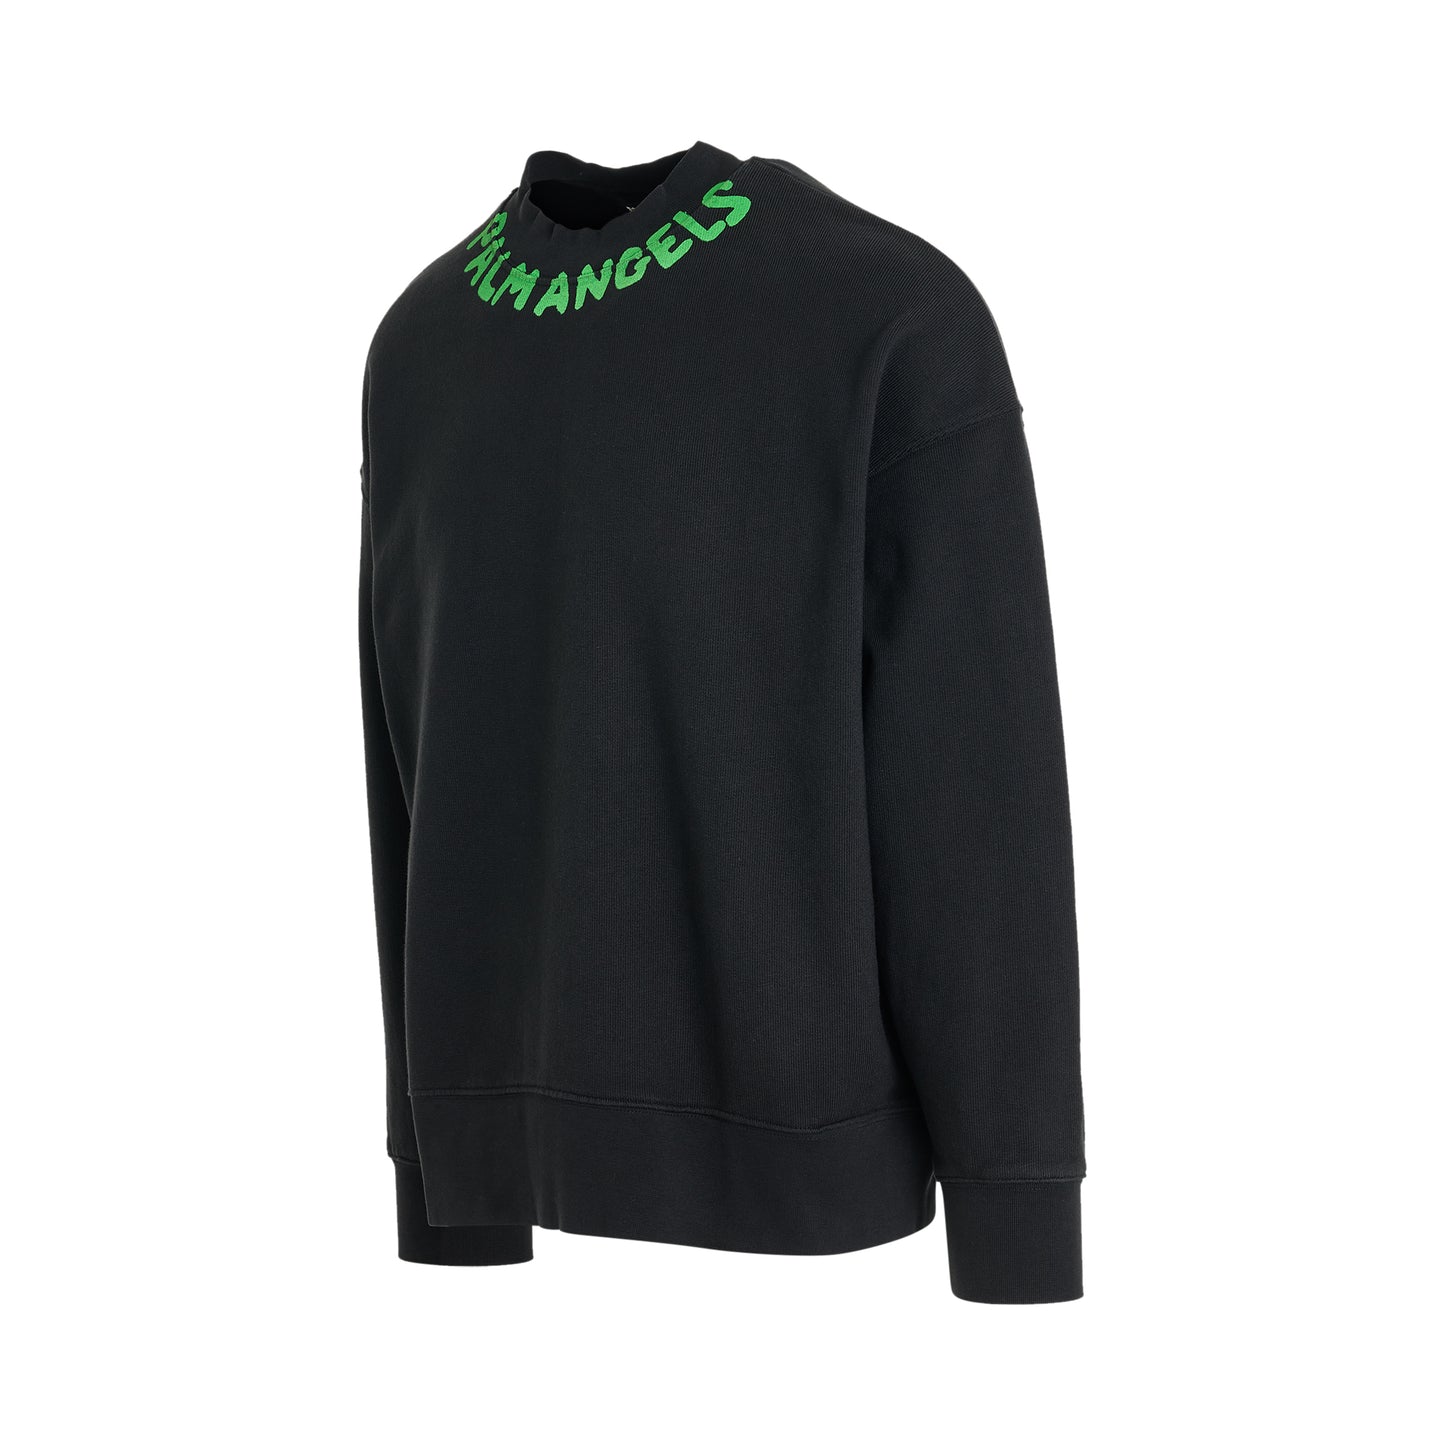 Seasonal Logo Crewneck Sweater in Black/Green